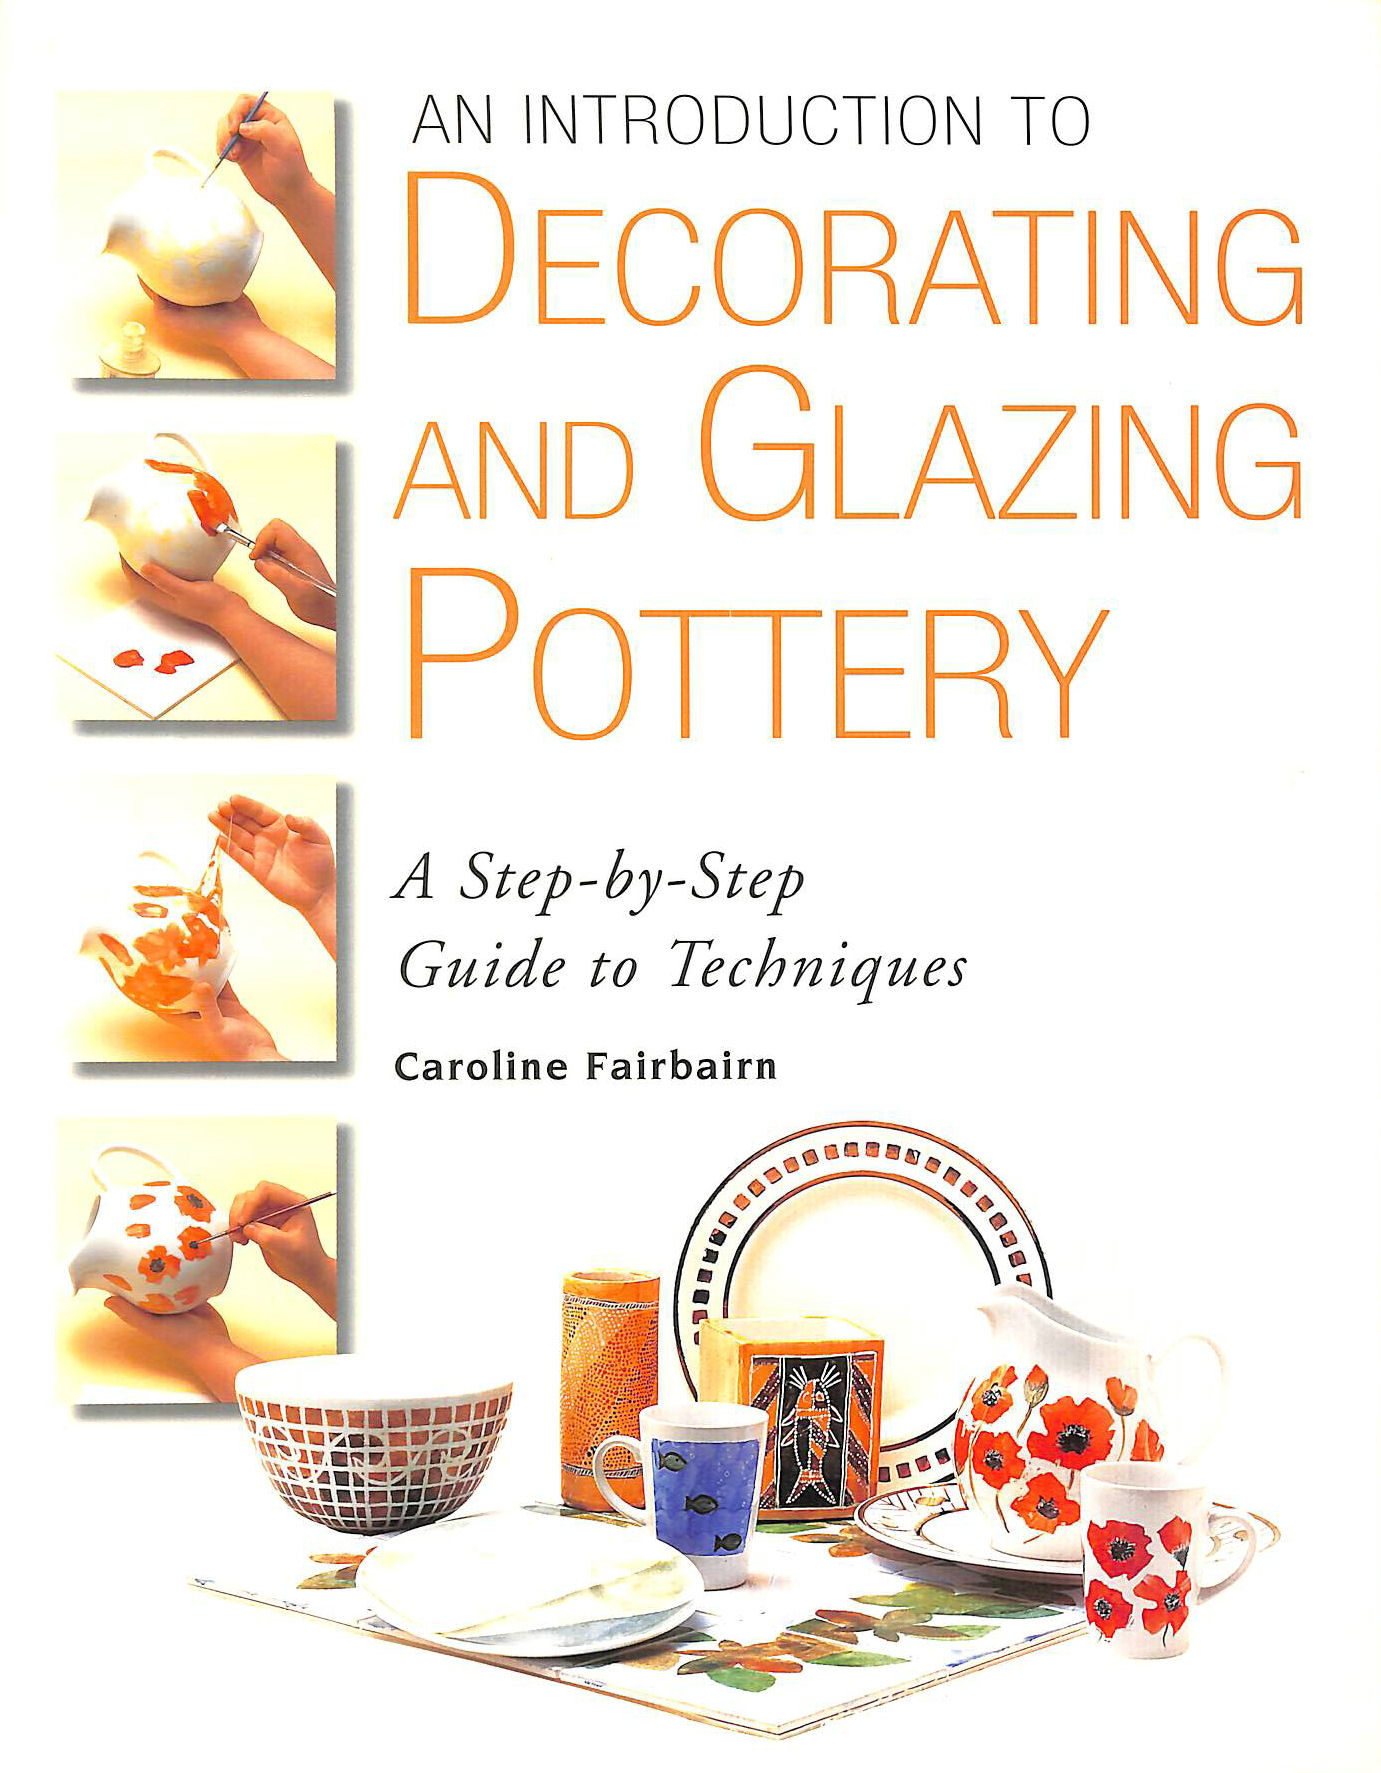 CAROLINE FAIRBAIRN - Introduction to Decorating & Glazing Pottery